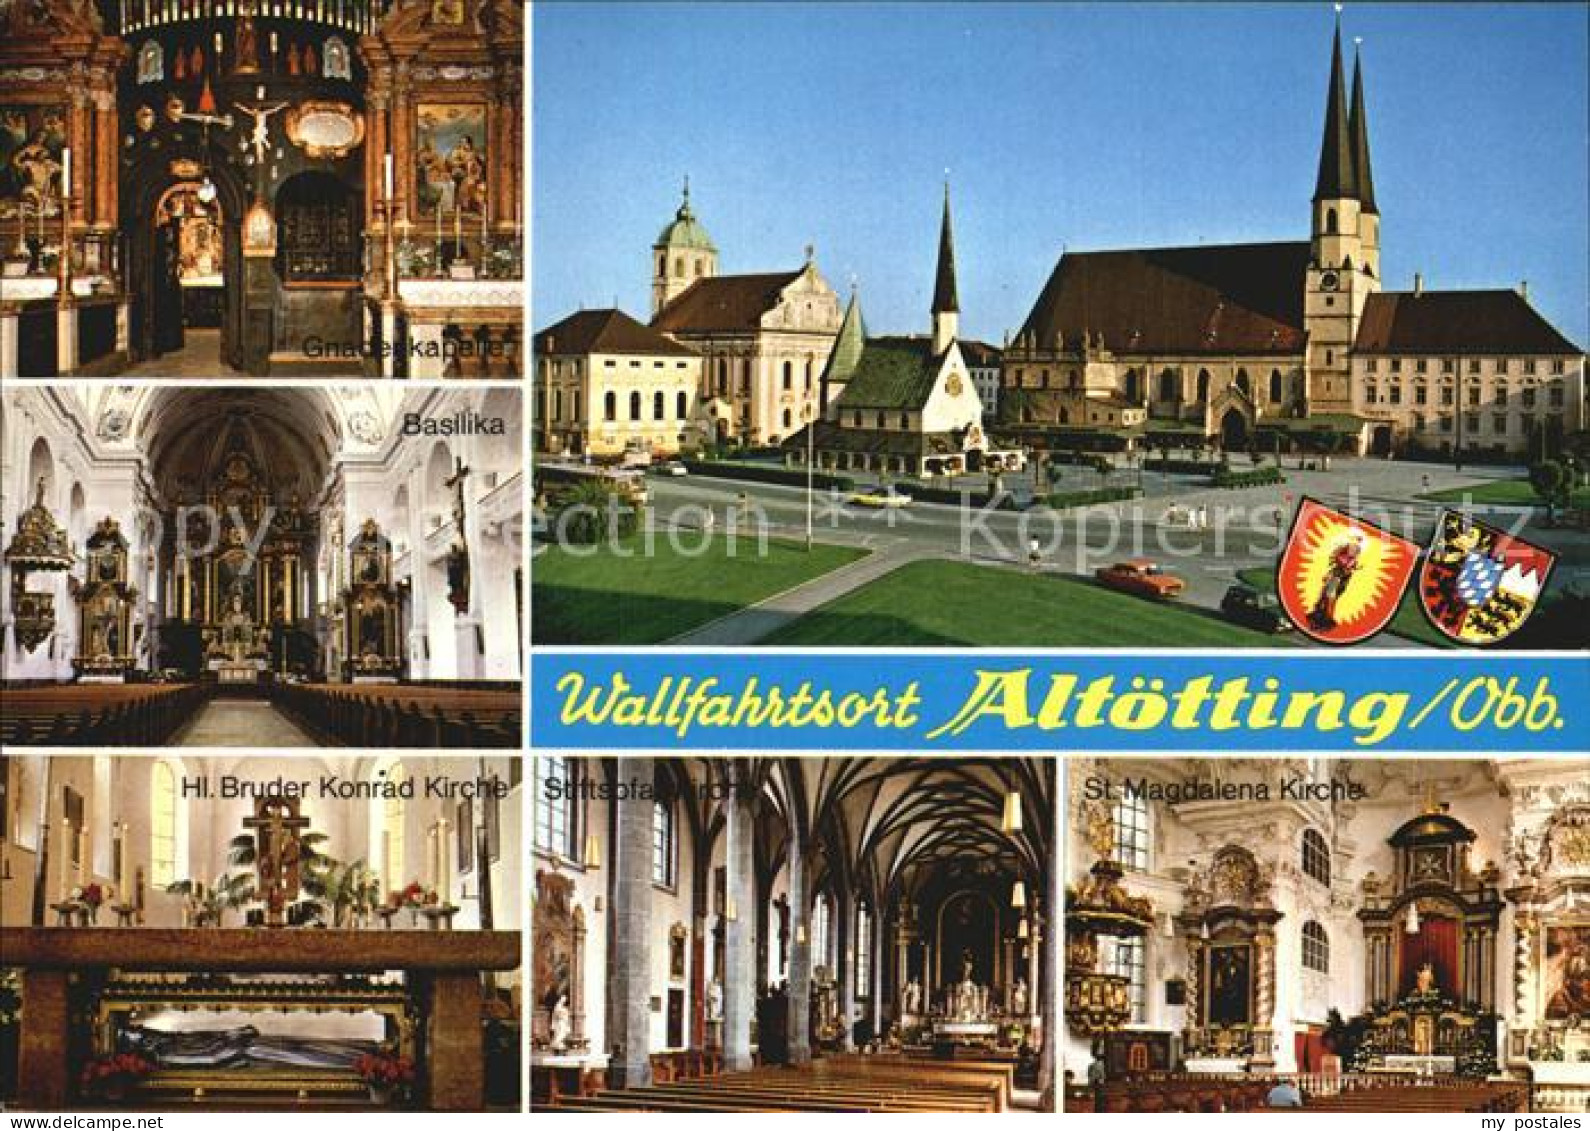 72525253 Altoetting Gnadenkapelle Basilika Hl Bruder Konrad Kirche Stiftspfarrki - Altoetting